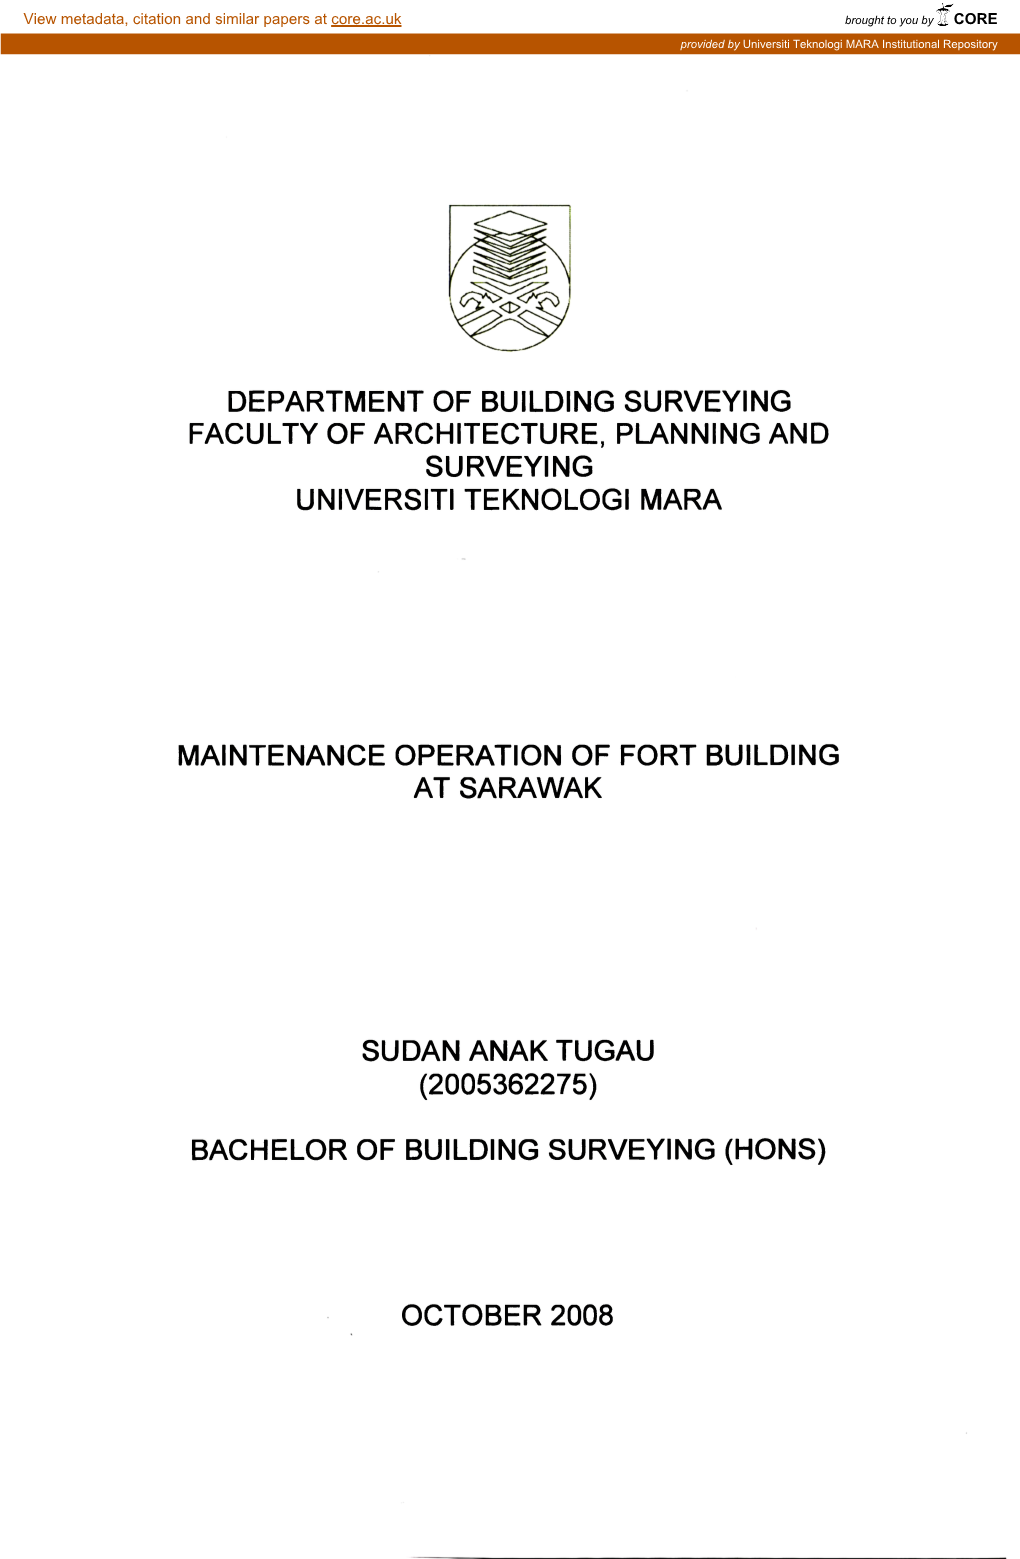 Department of Building Surveying Faculty of Architecture, Planning and Surveying Universiti Teknologi Mara